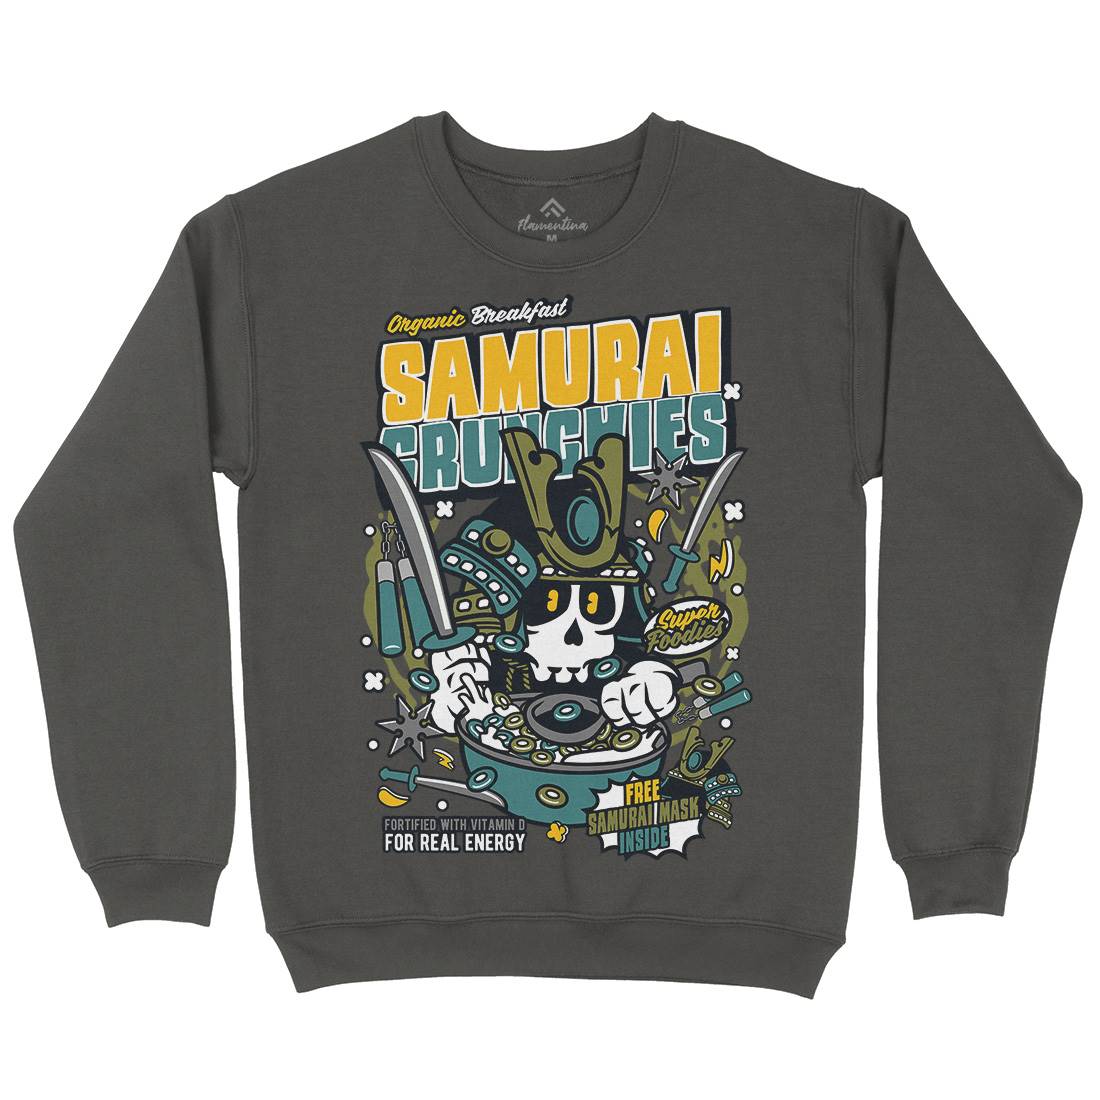 Samurai Crunches Kids Crew Neck Sweatshirt Food C639